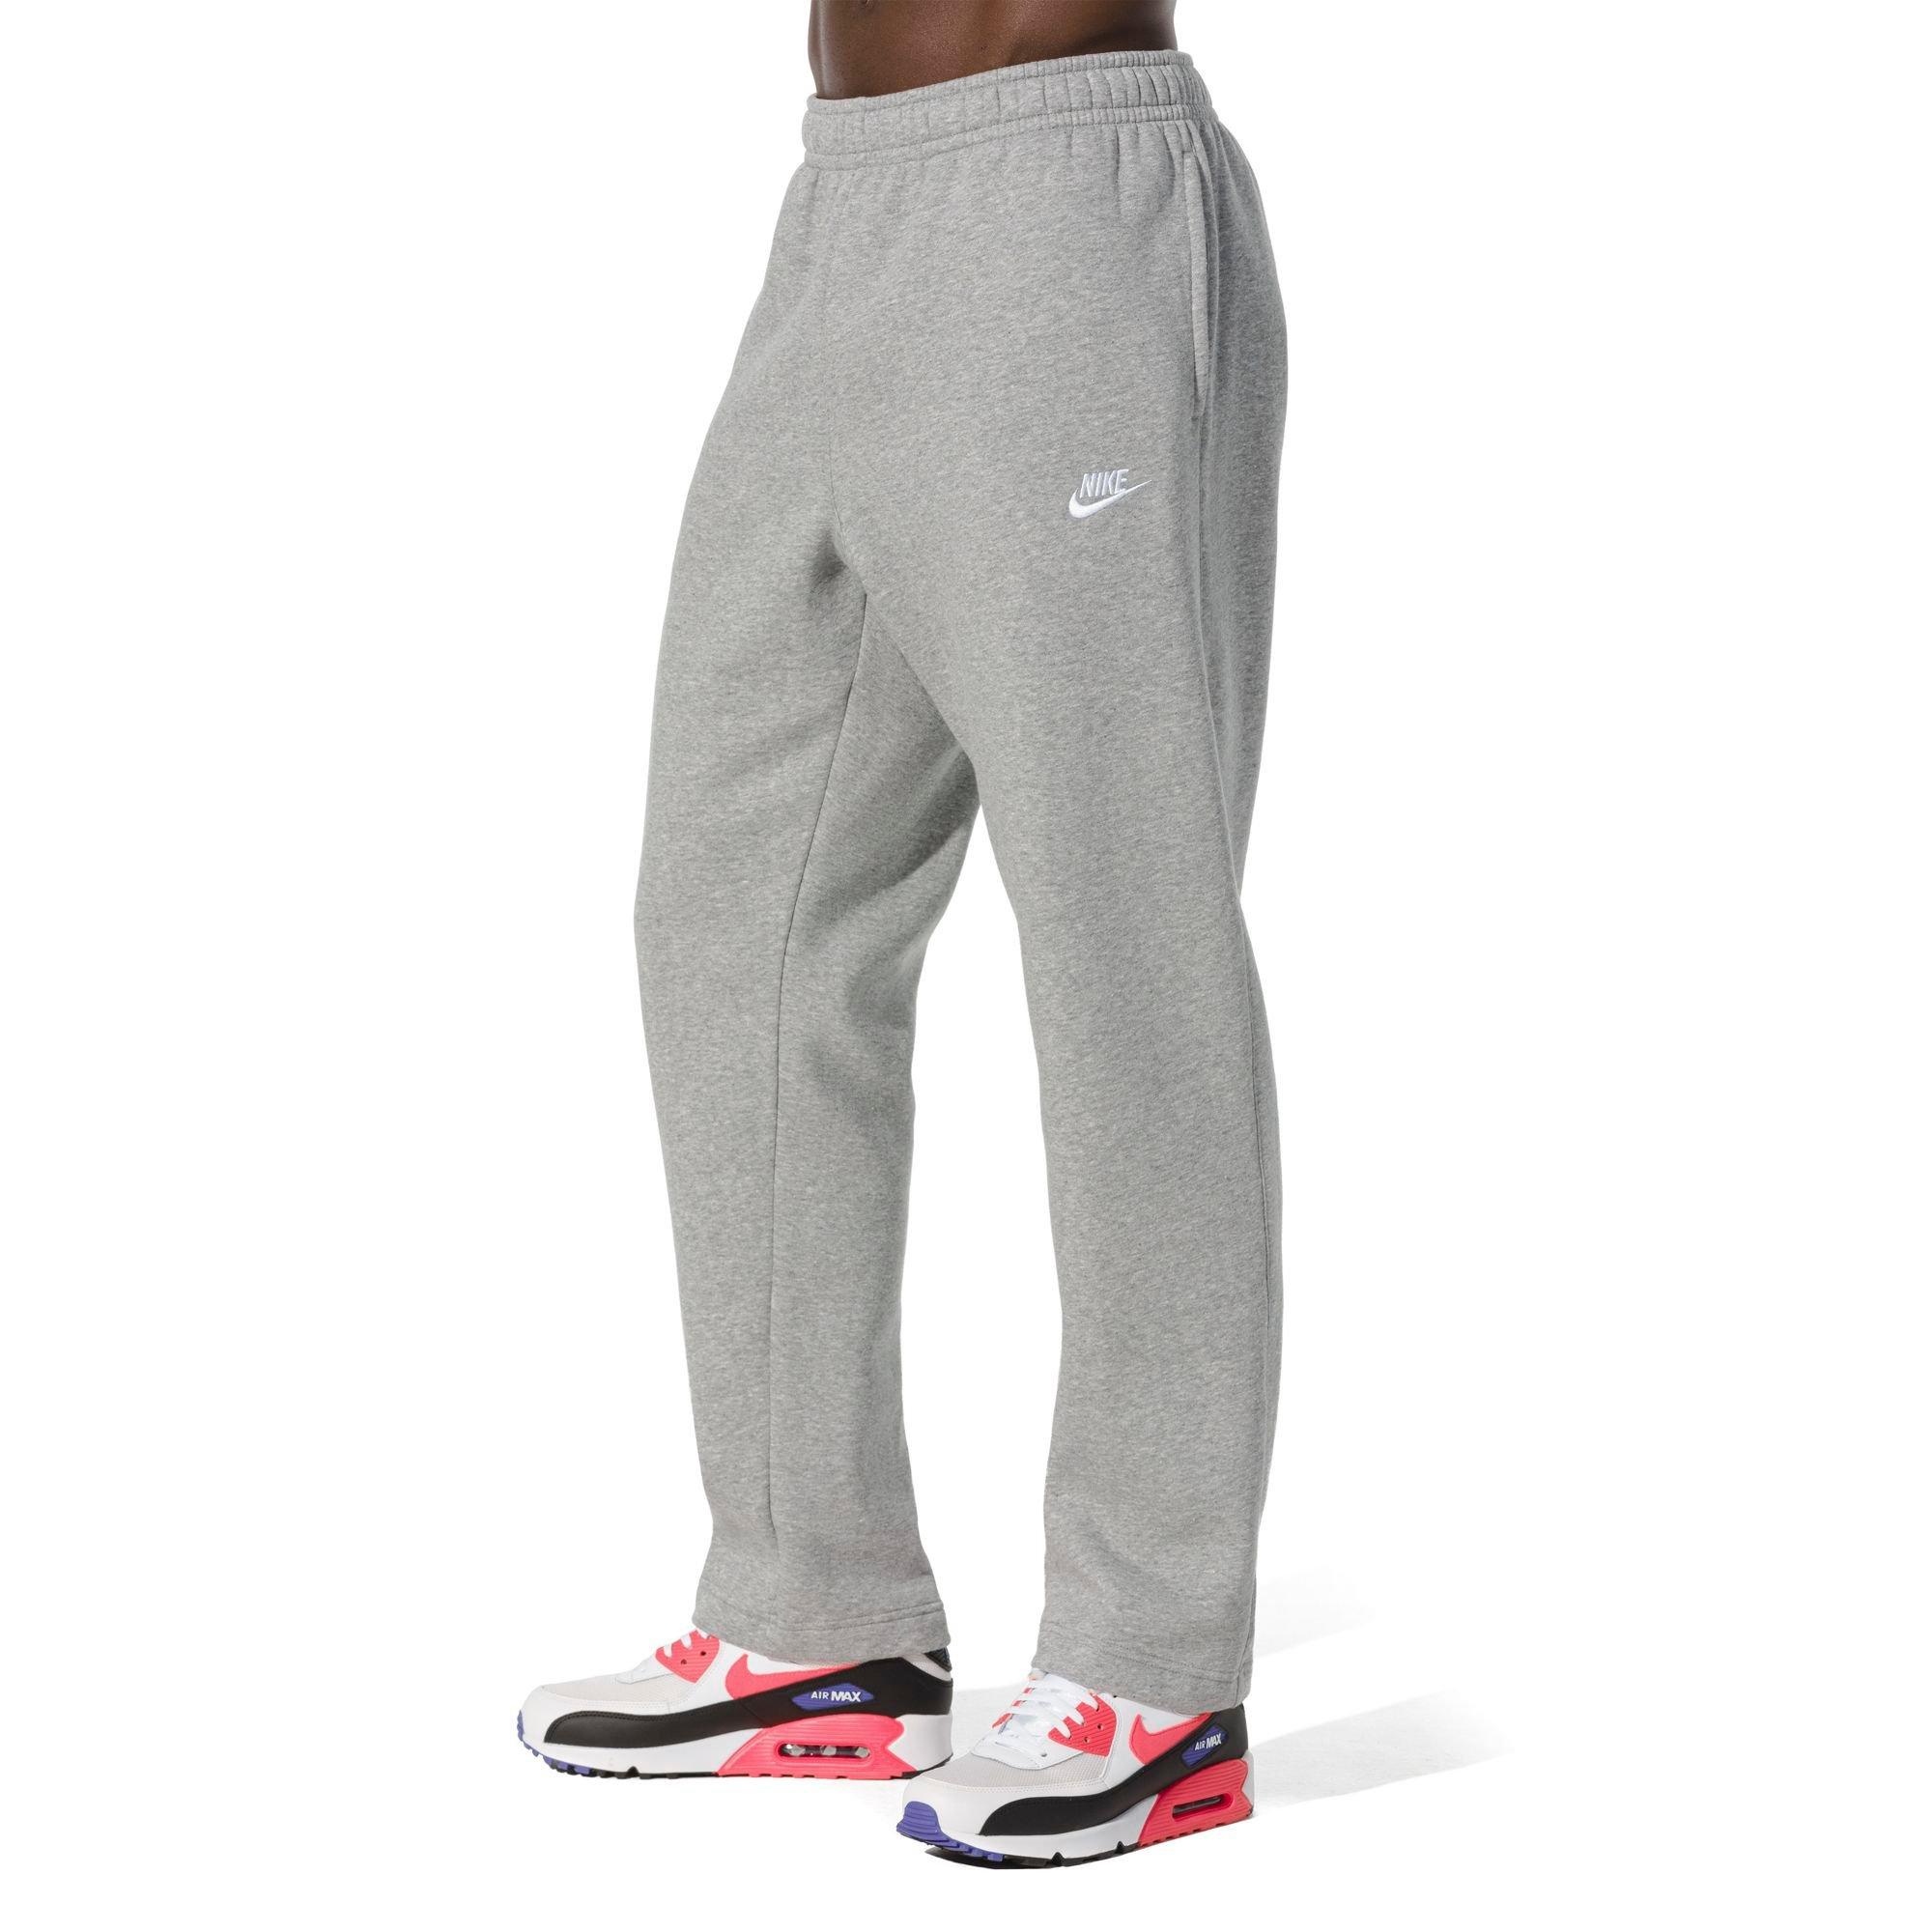 Nike Men's 19 Fleece Pant